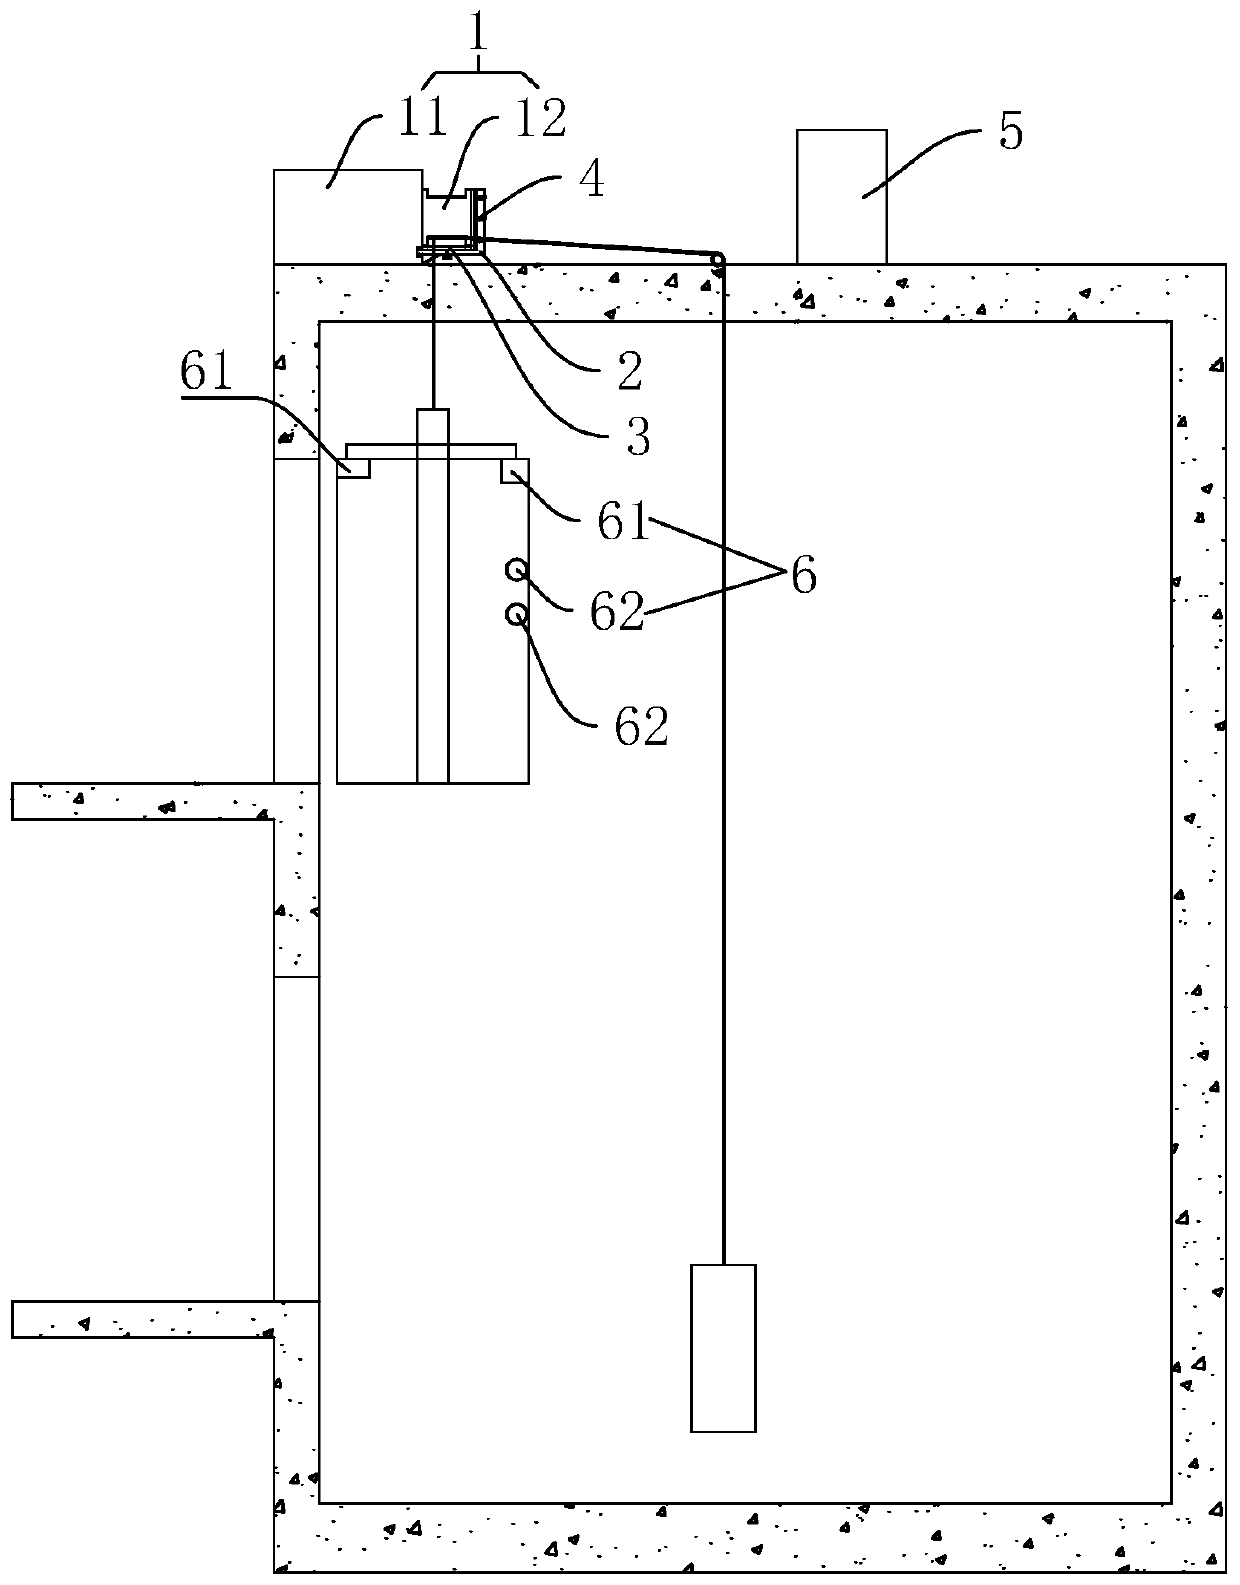 Elevator safety monitoring device